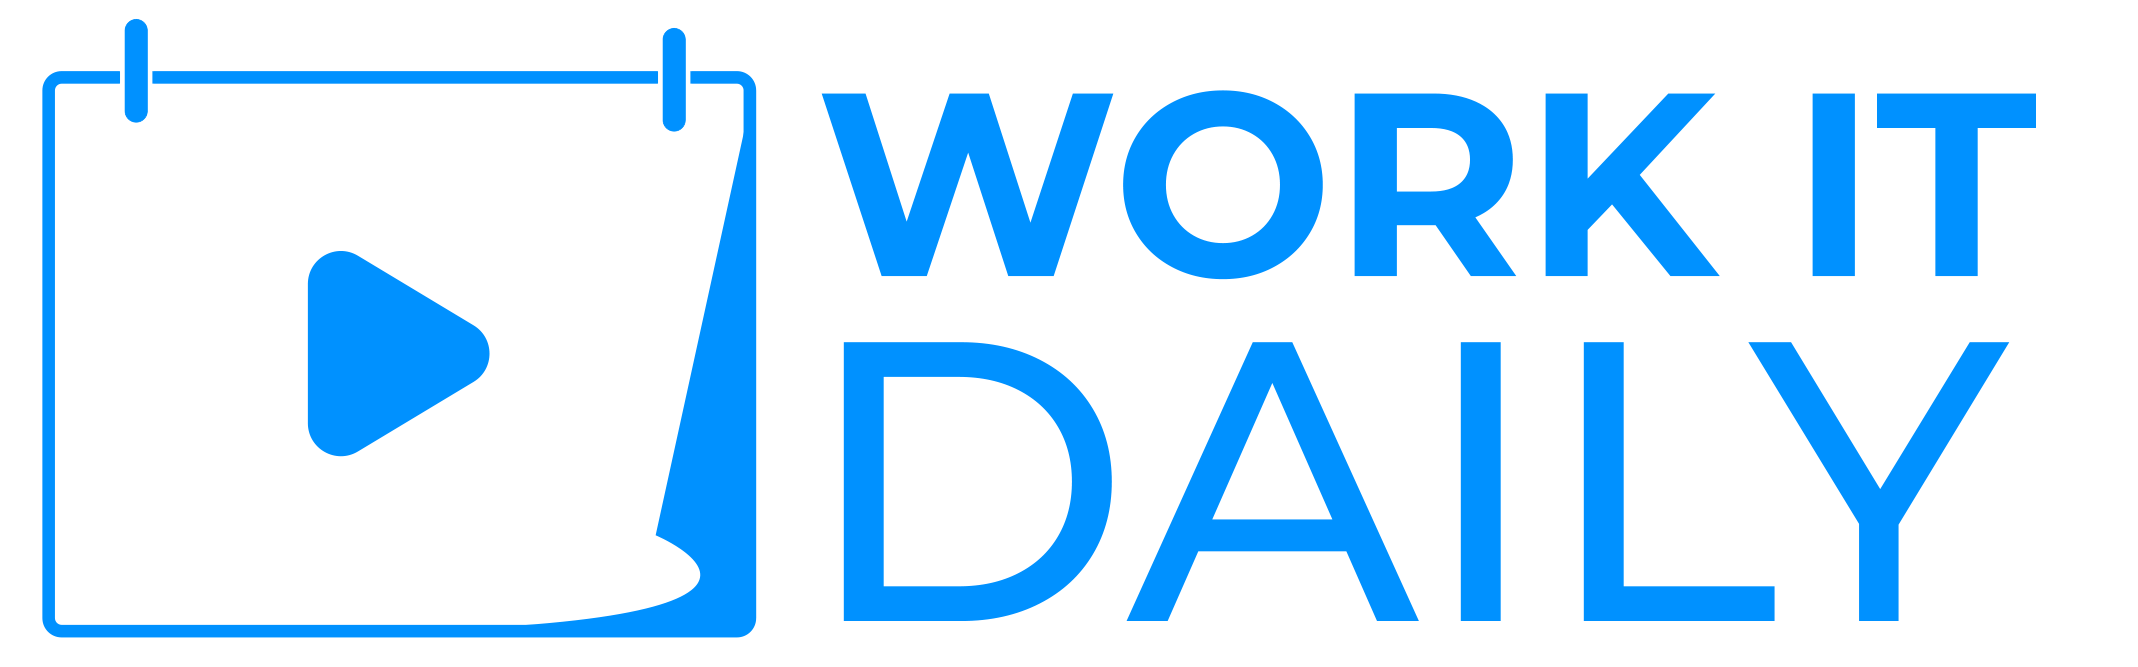 Work It Daily logo